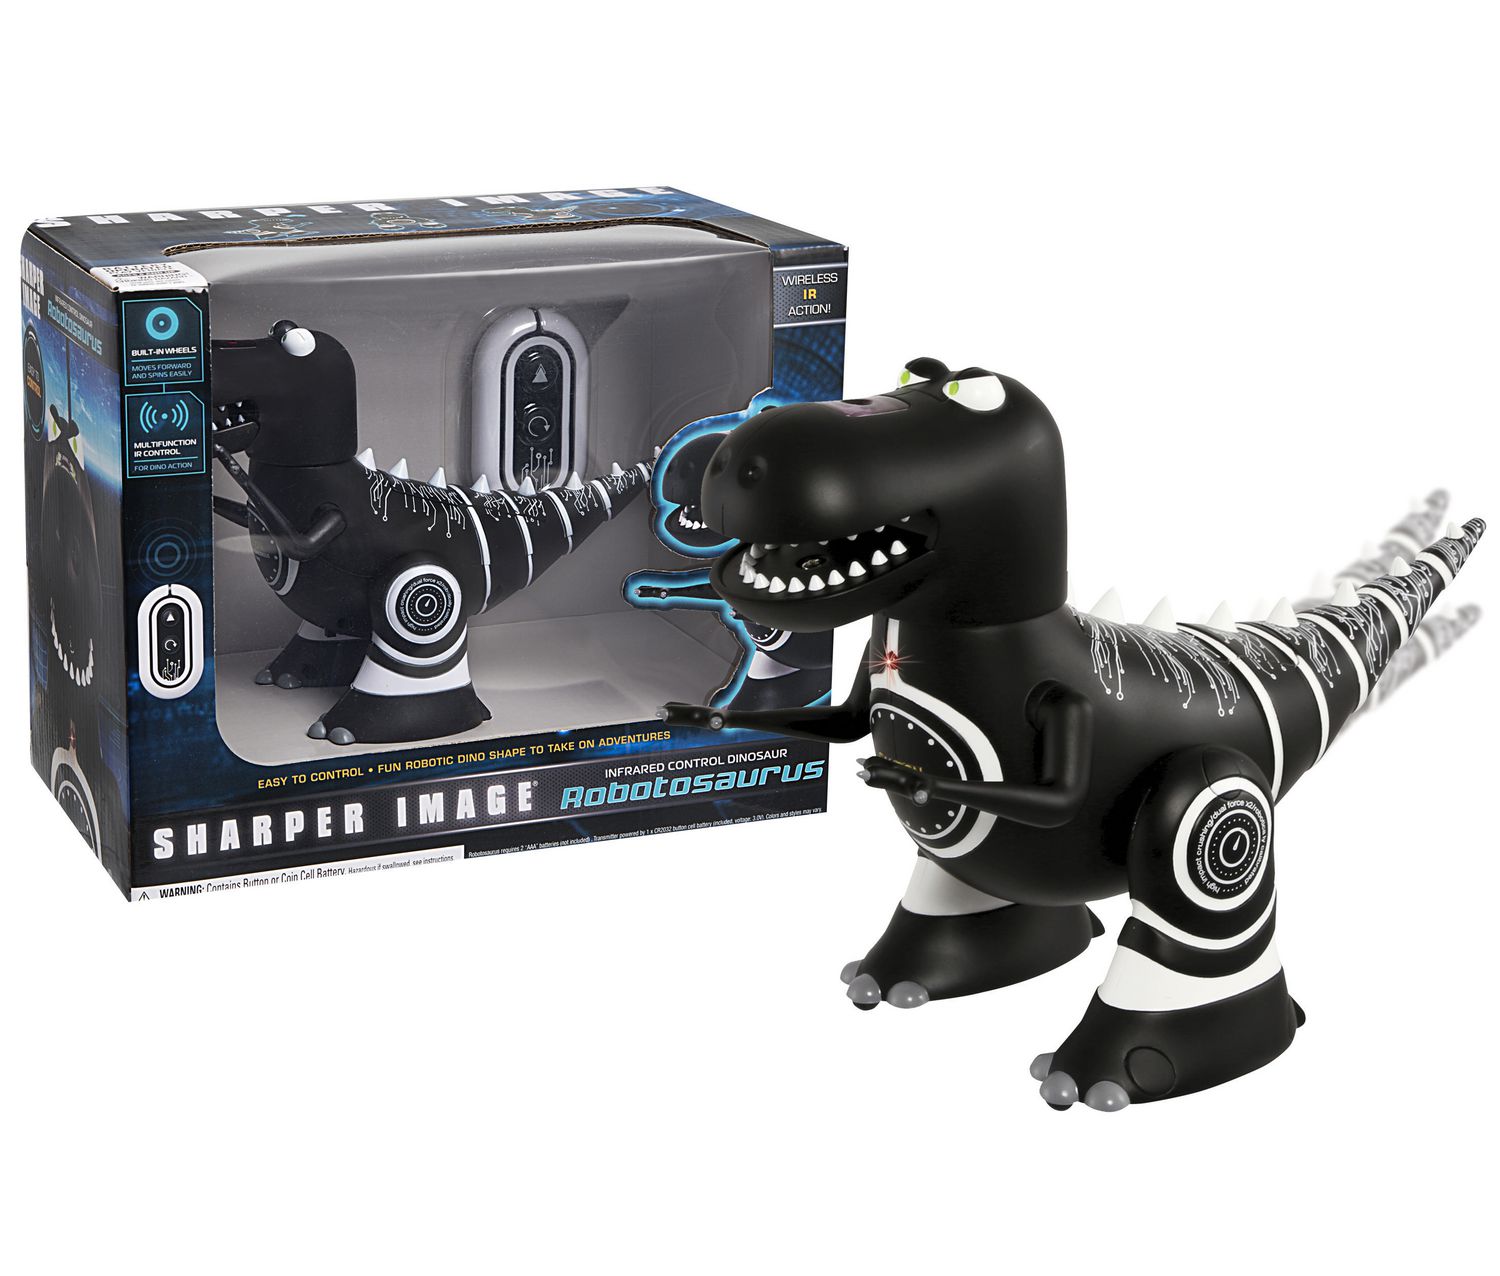 Sharper Image Remote Control Robot Dinosaur Mini Robotosaurus RC Wireless IR for sale online 